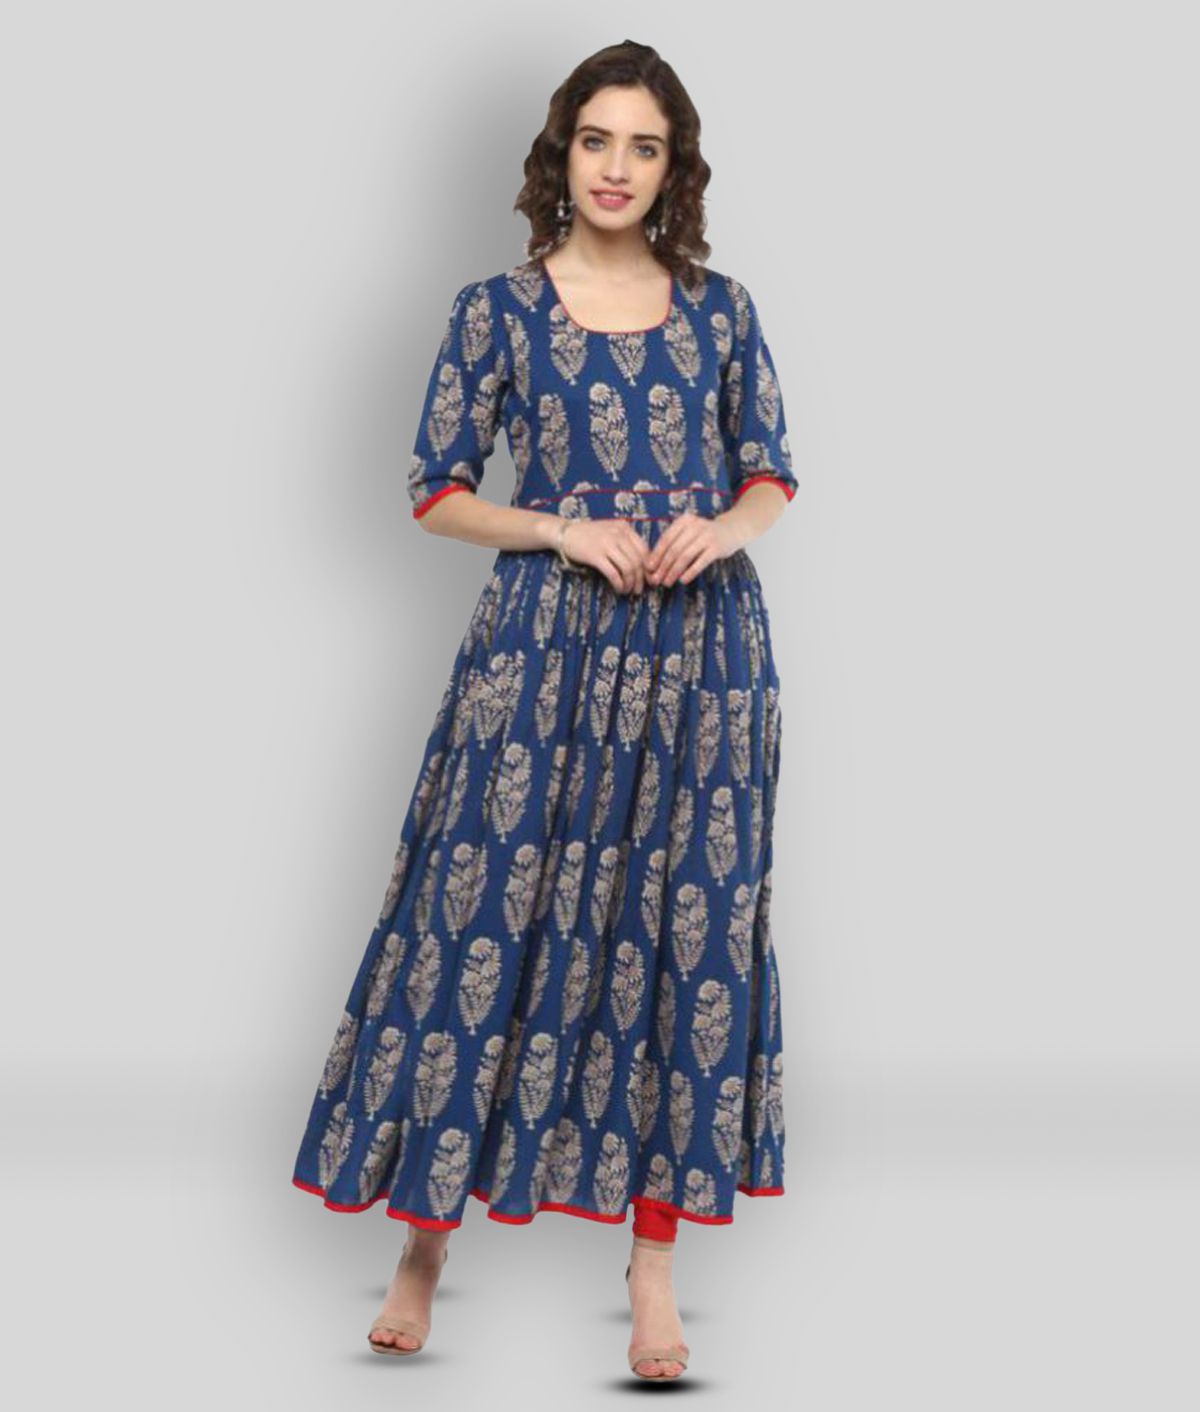     			Divena - Blue Cotton Blend Women's Anarkali Kurti